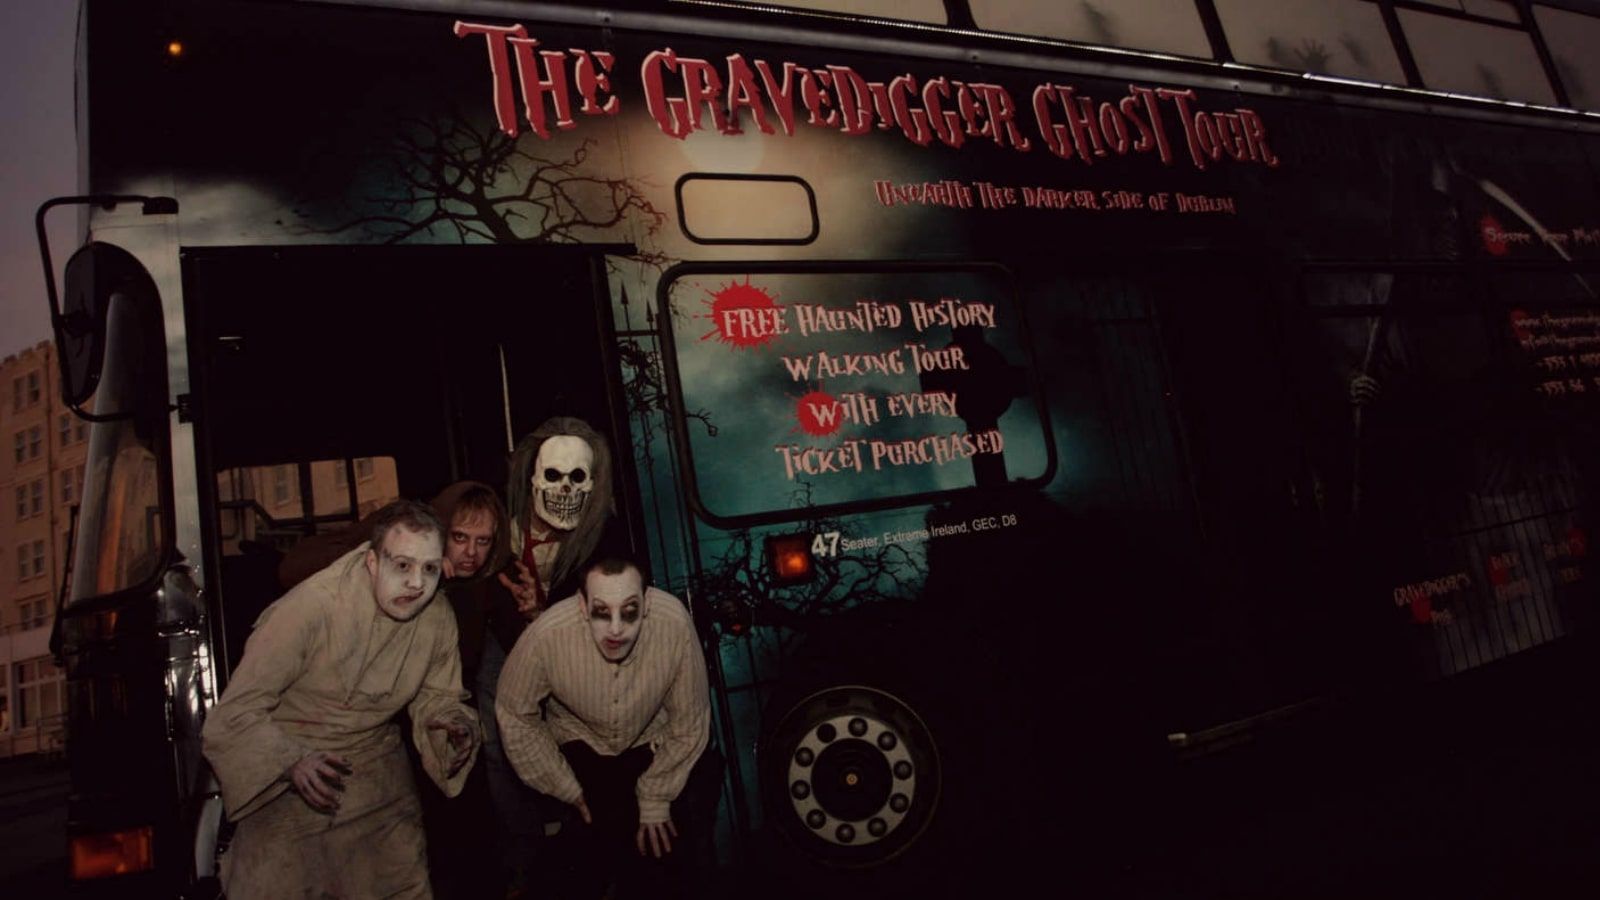 Gravedigger Ghost Tour 2